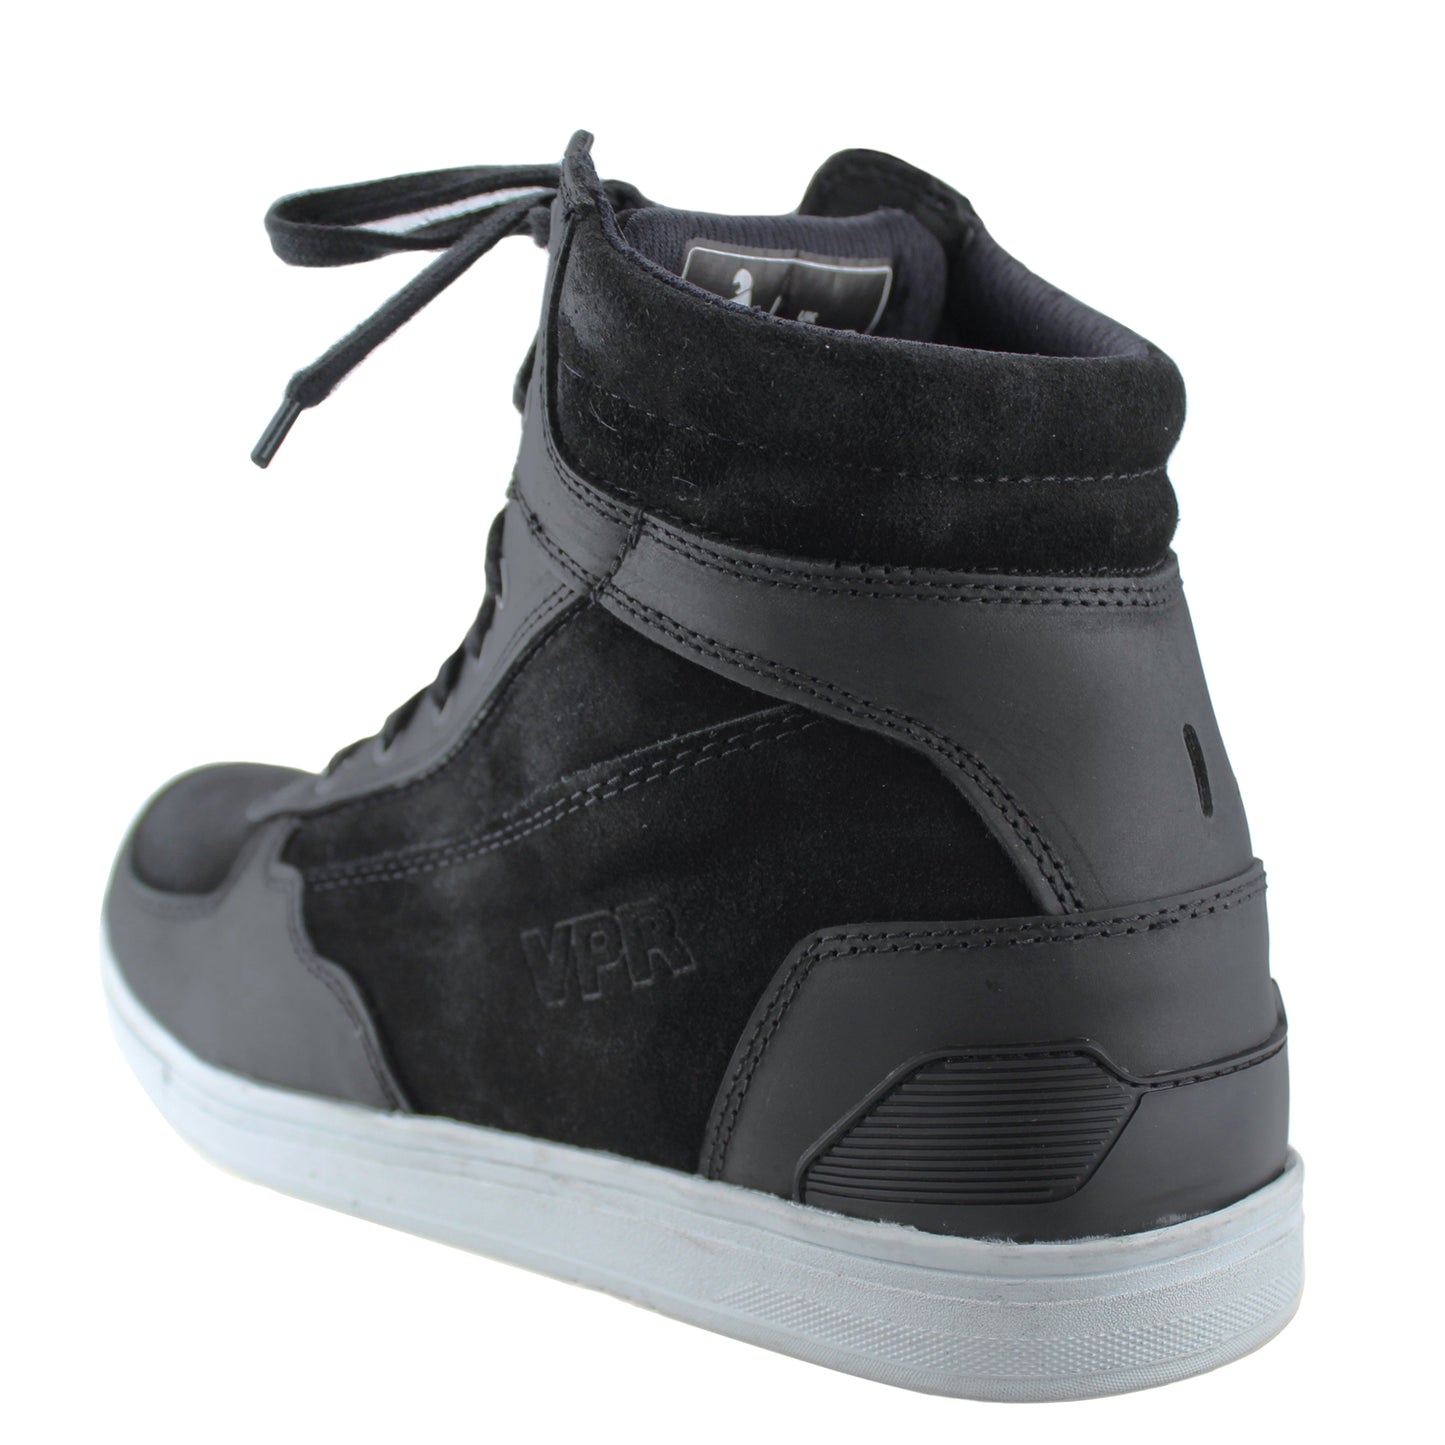 VPR R10 Sneaker Boots - Black